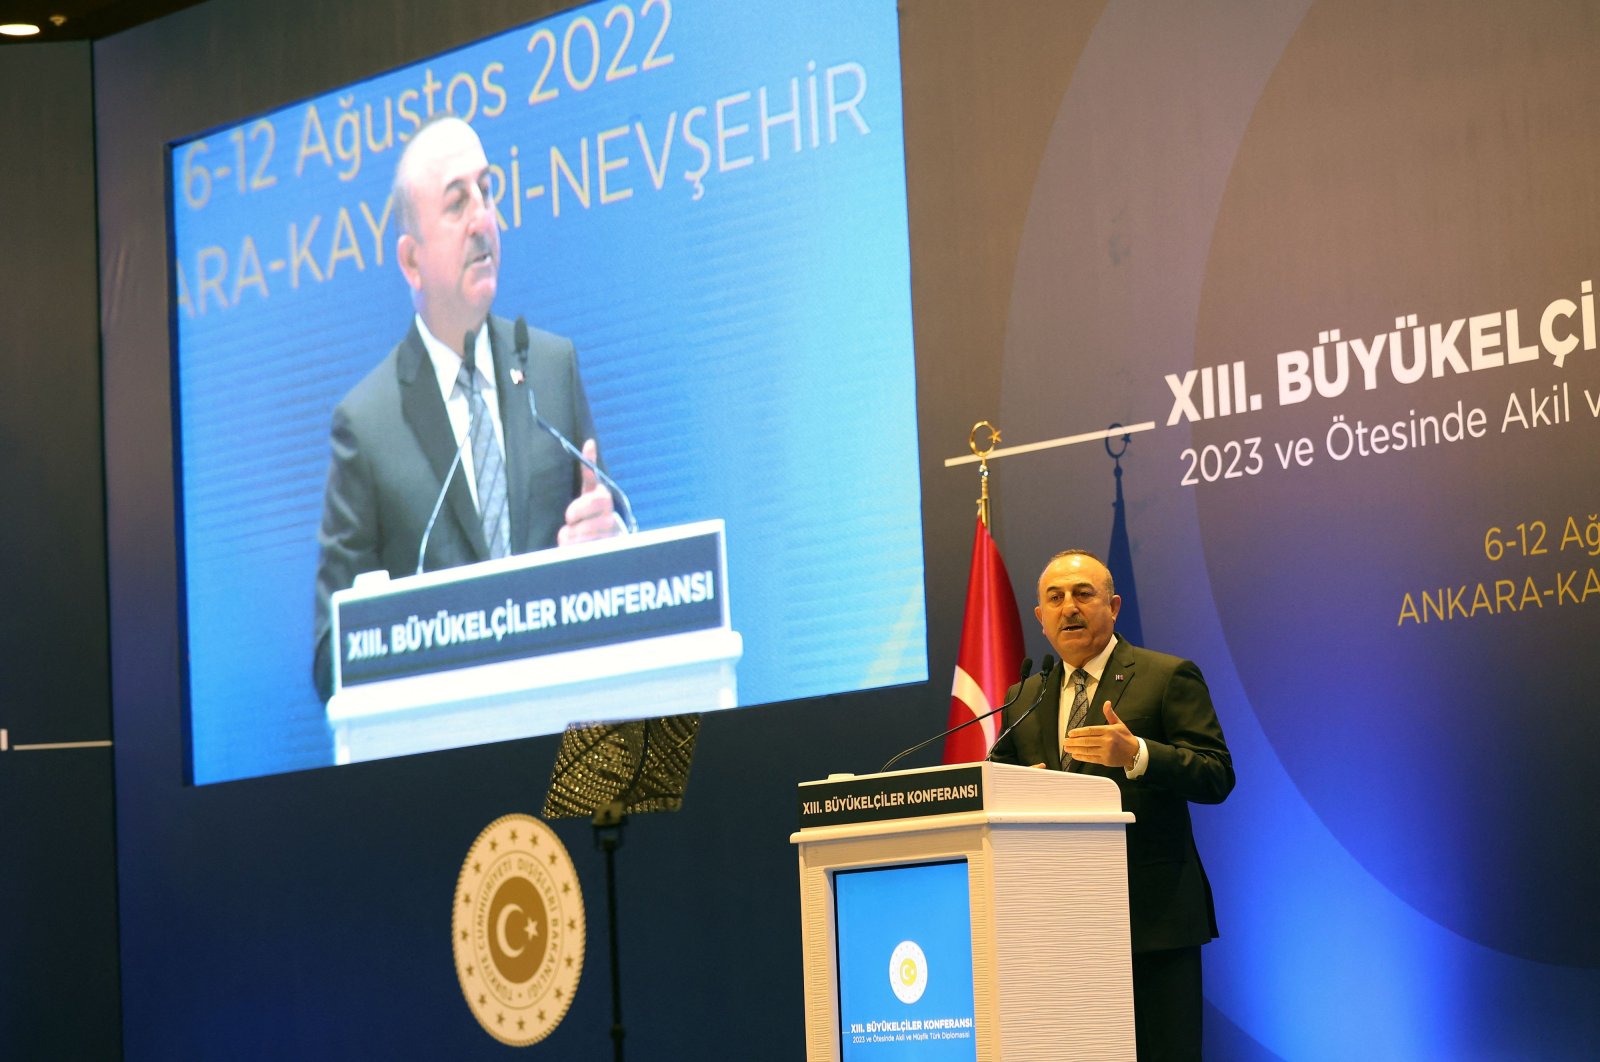 Turkish Foreign Minister Mevlüt Çavuşoğlu speaks during the 13th Ambassadors Conference in Ankara, Turkey, Aug. 8, 2022. (AFP Photo)